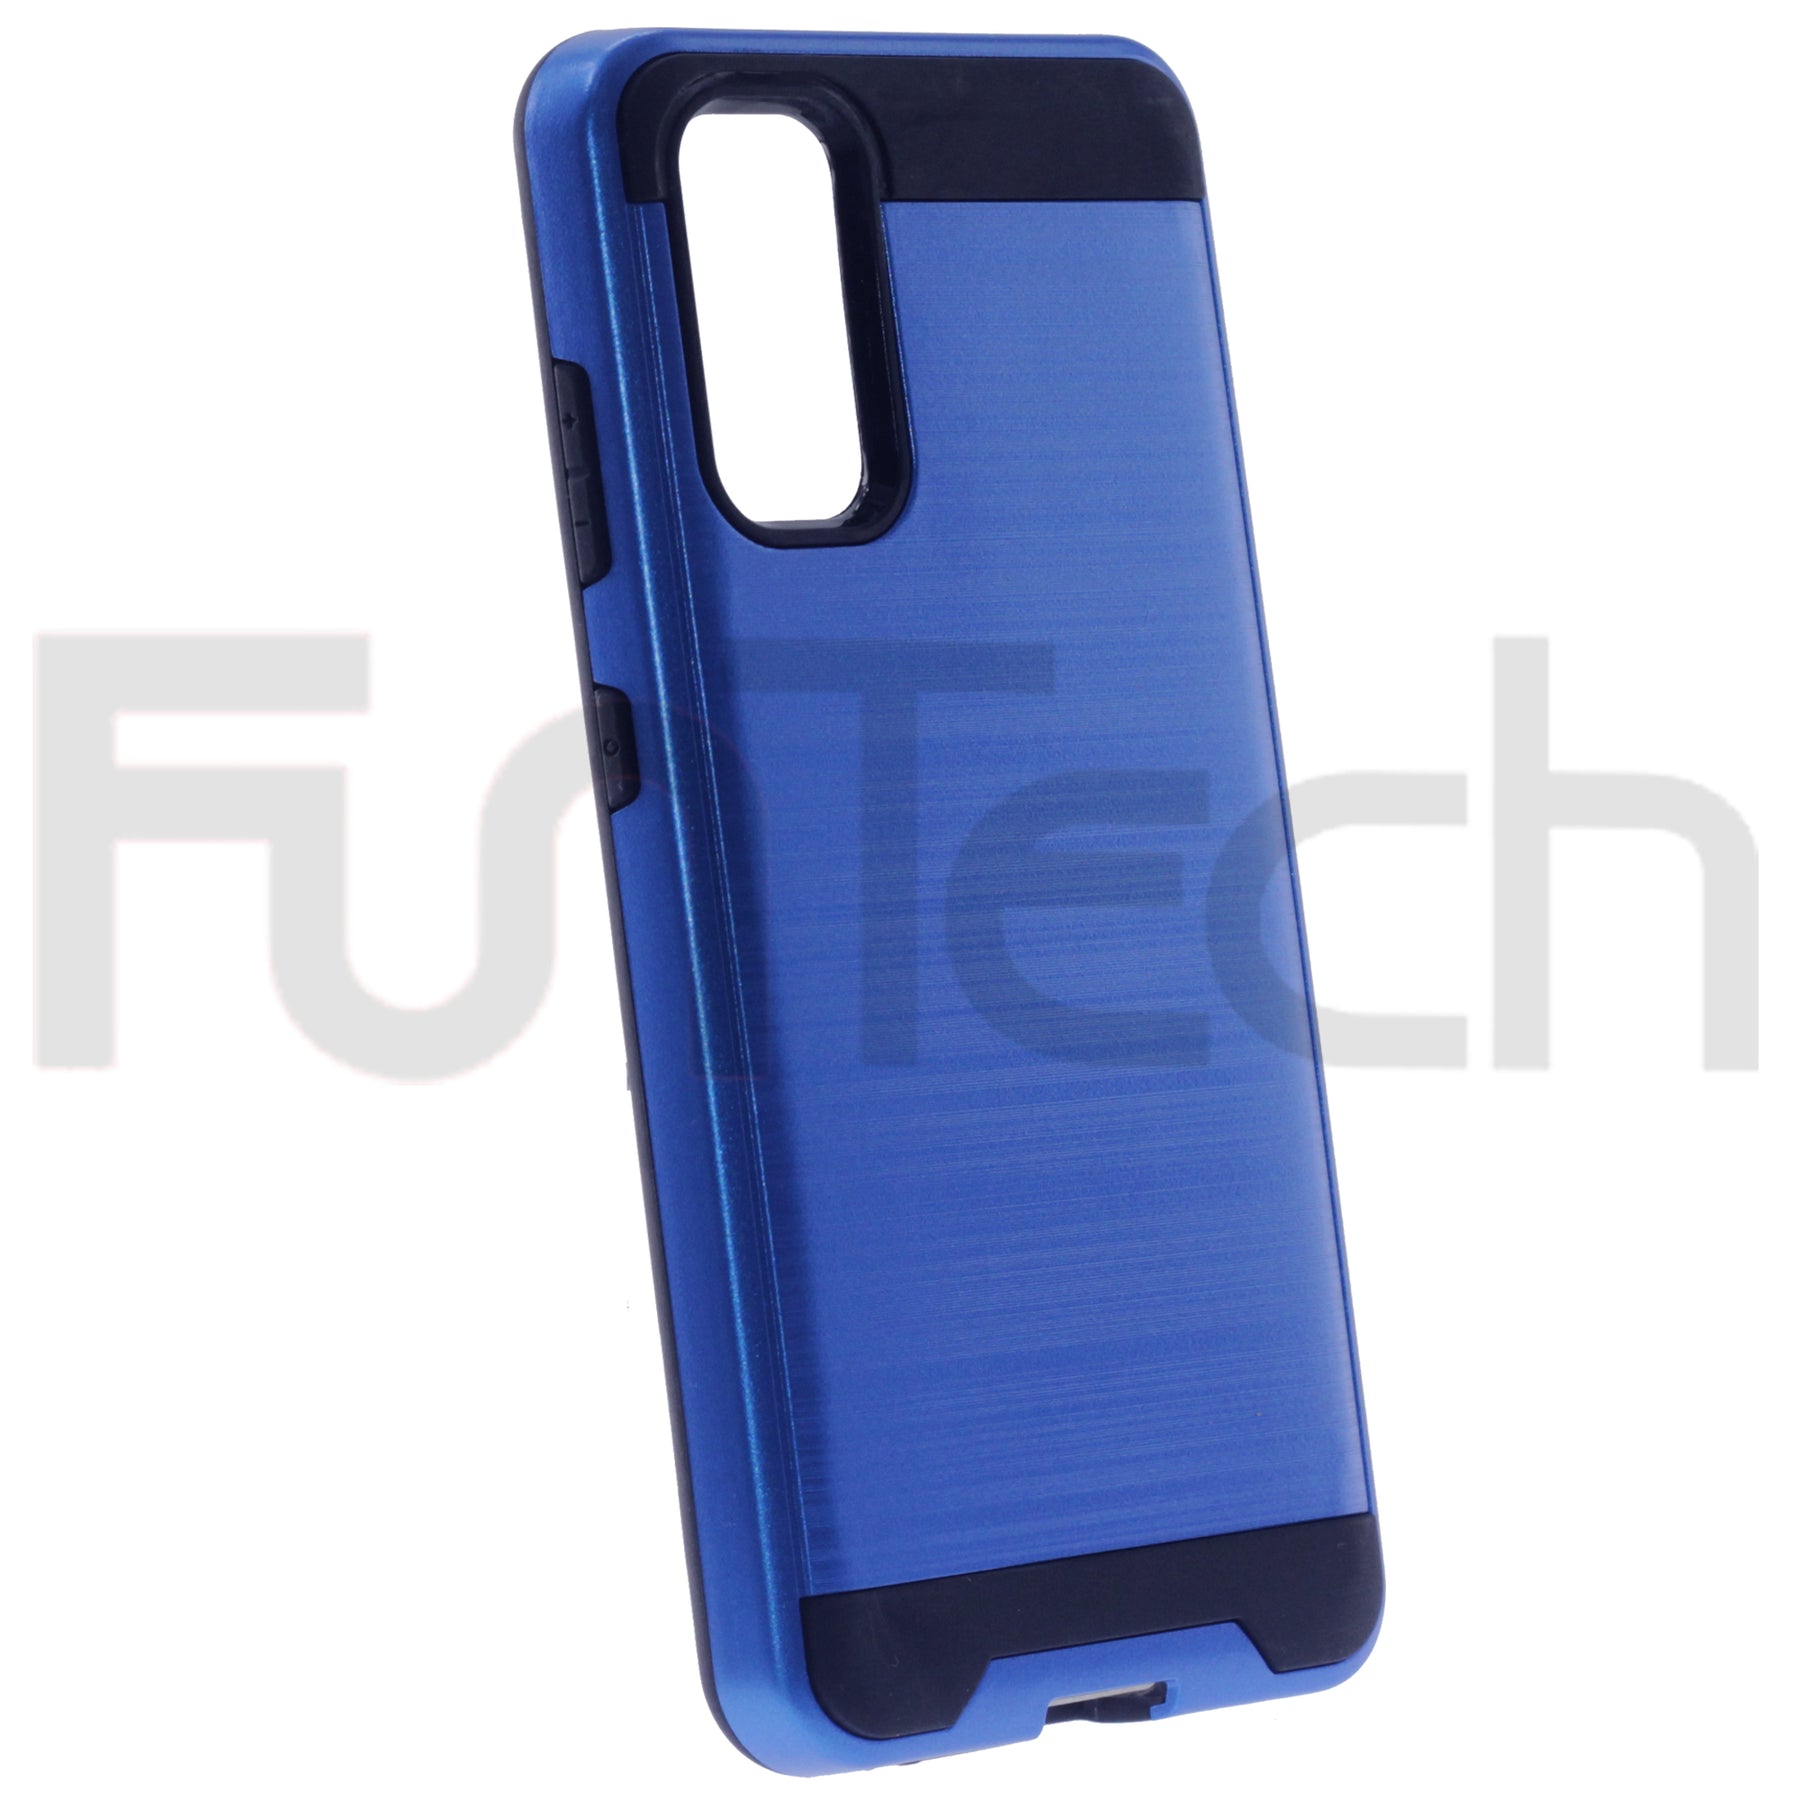 Samsung S20, Slim Armor Case, Color Blue.